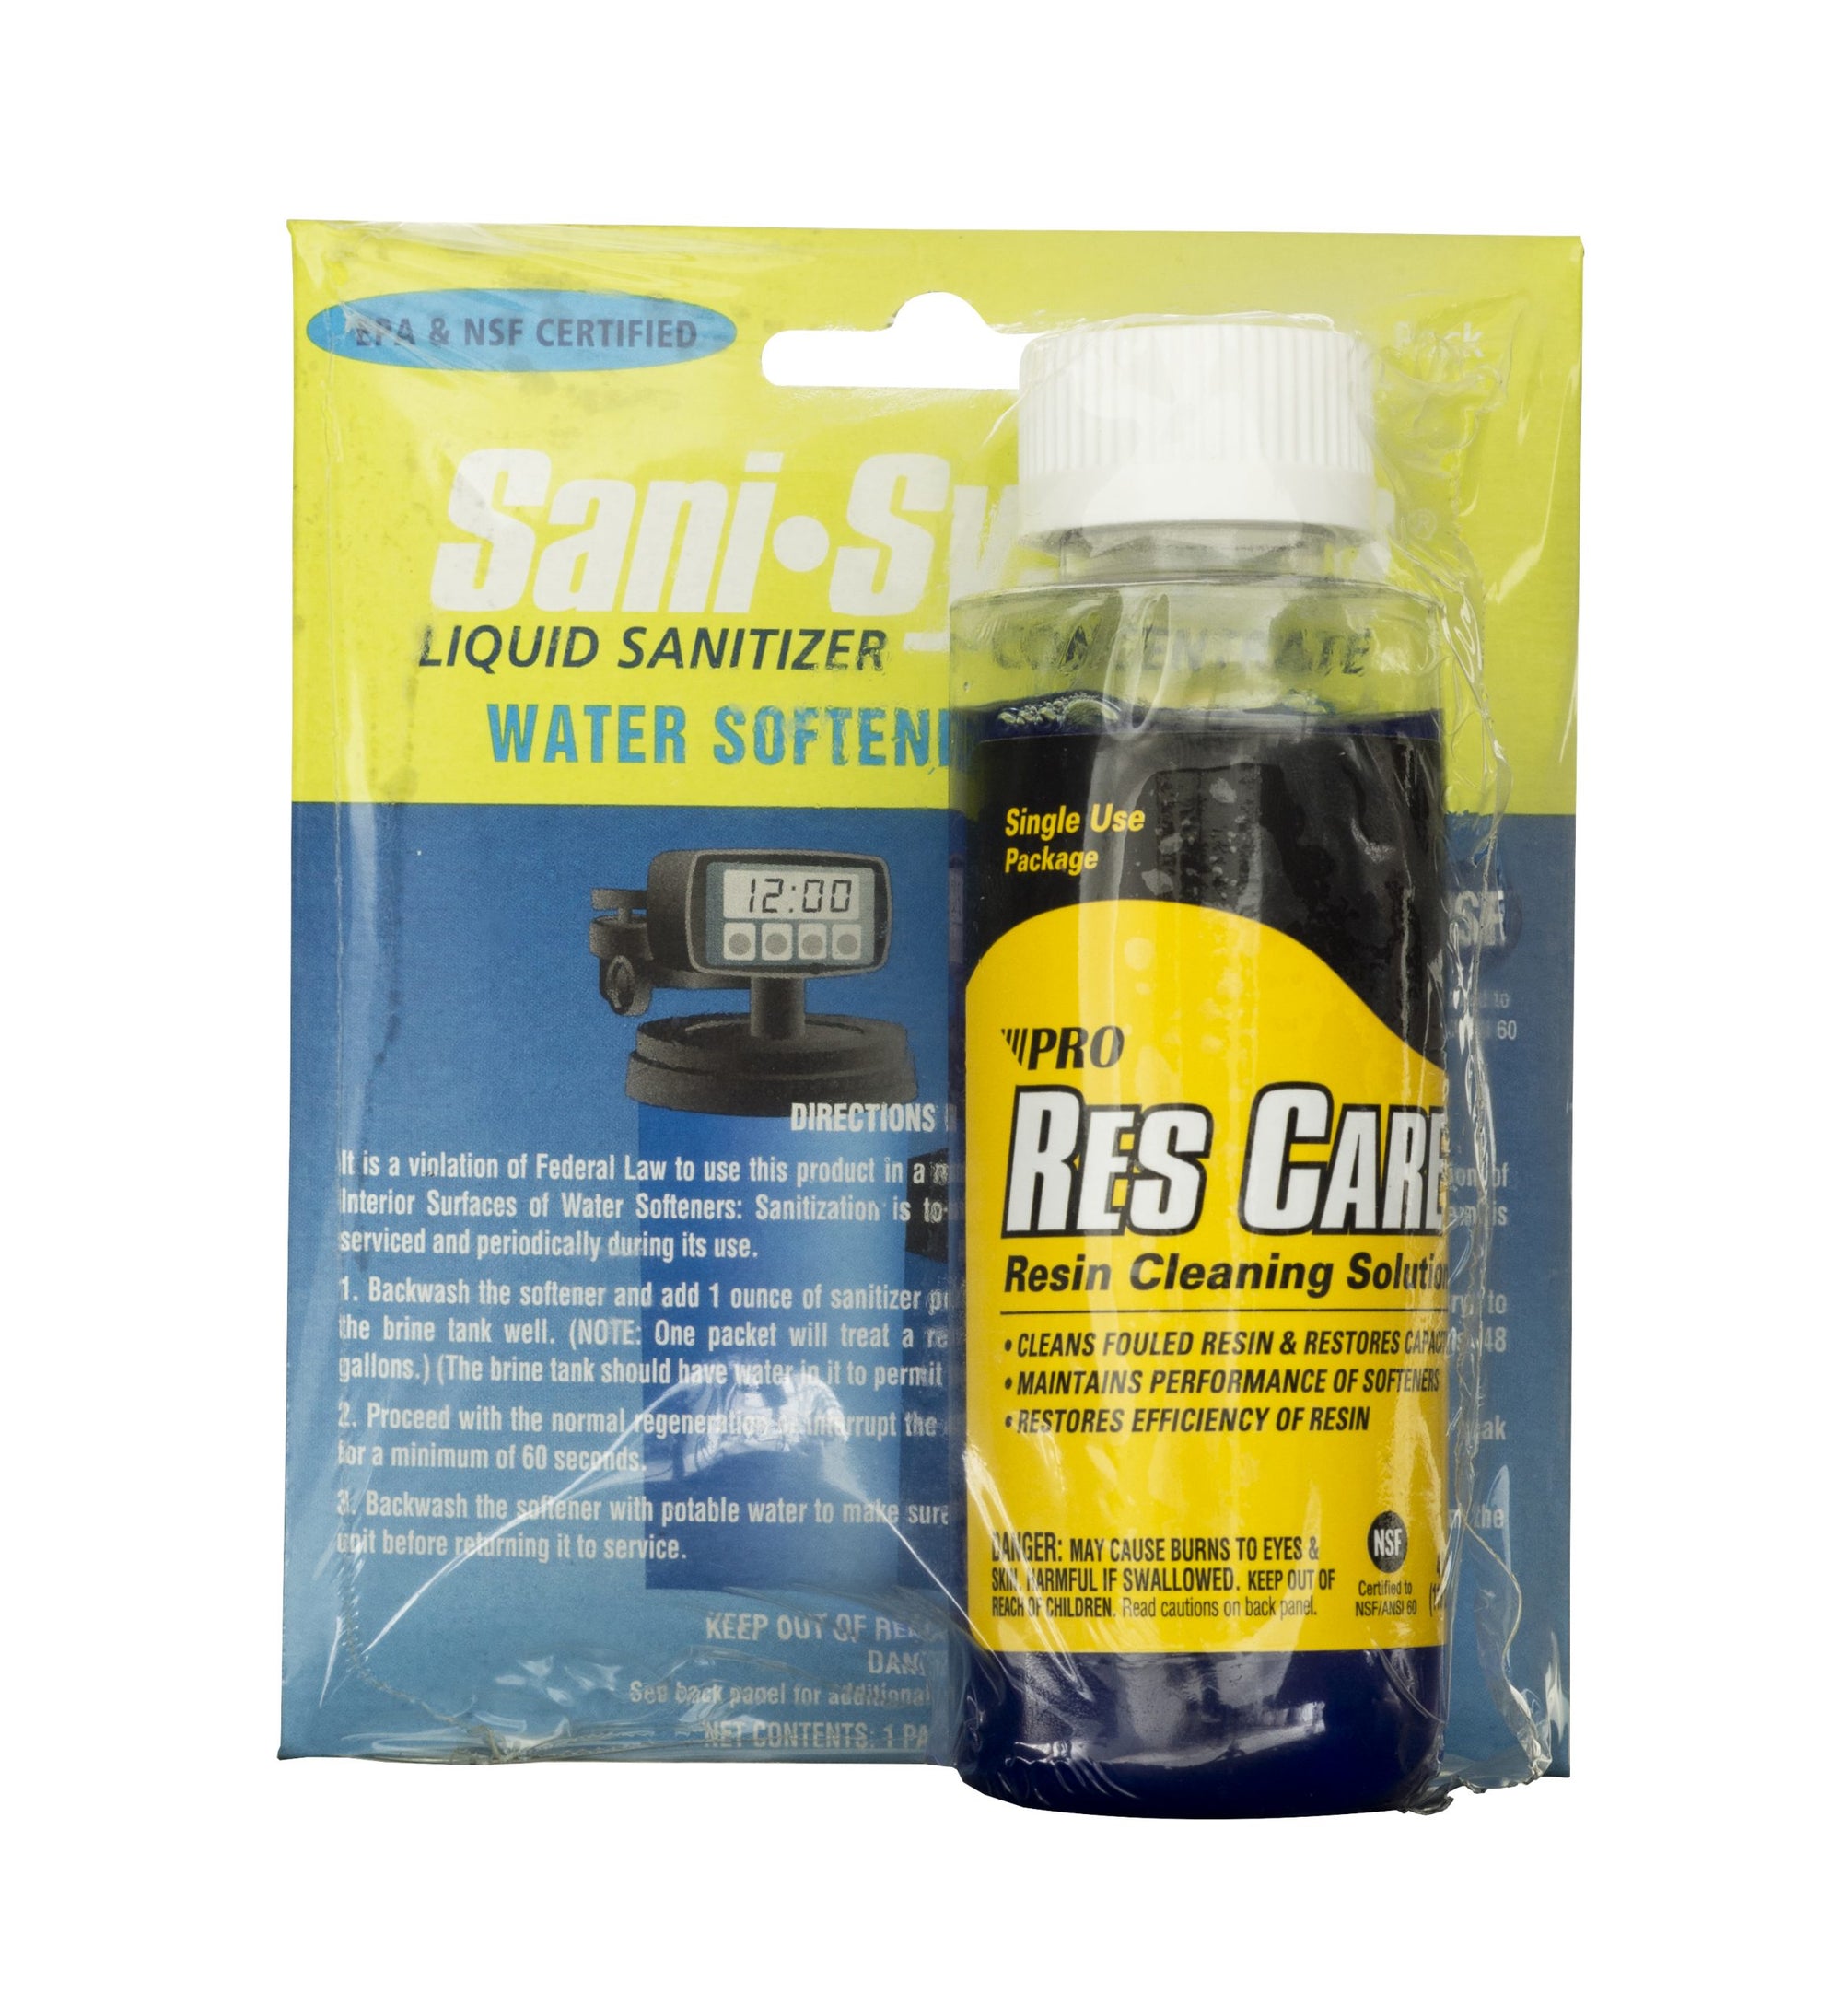 Pro Ban-T Citric Acid Resin Cleaner & pH Adjustment 45 lbs.